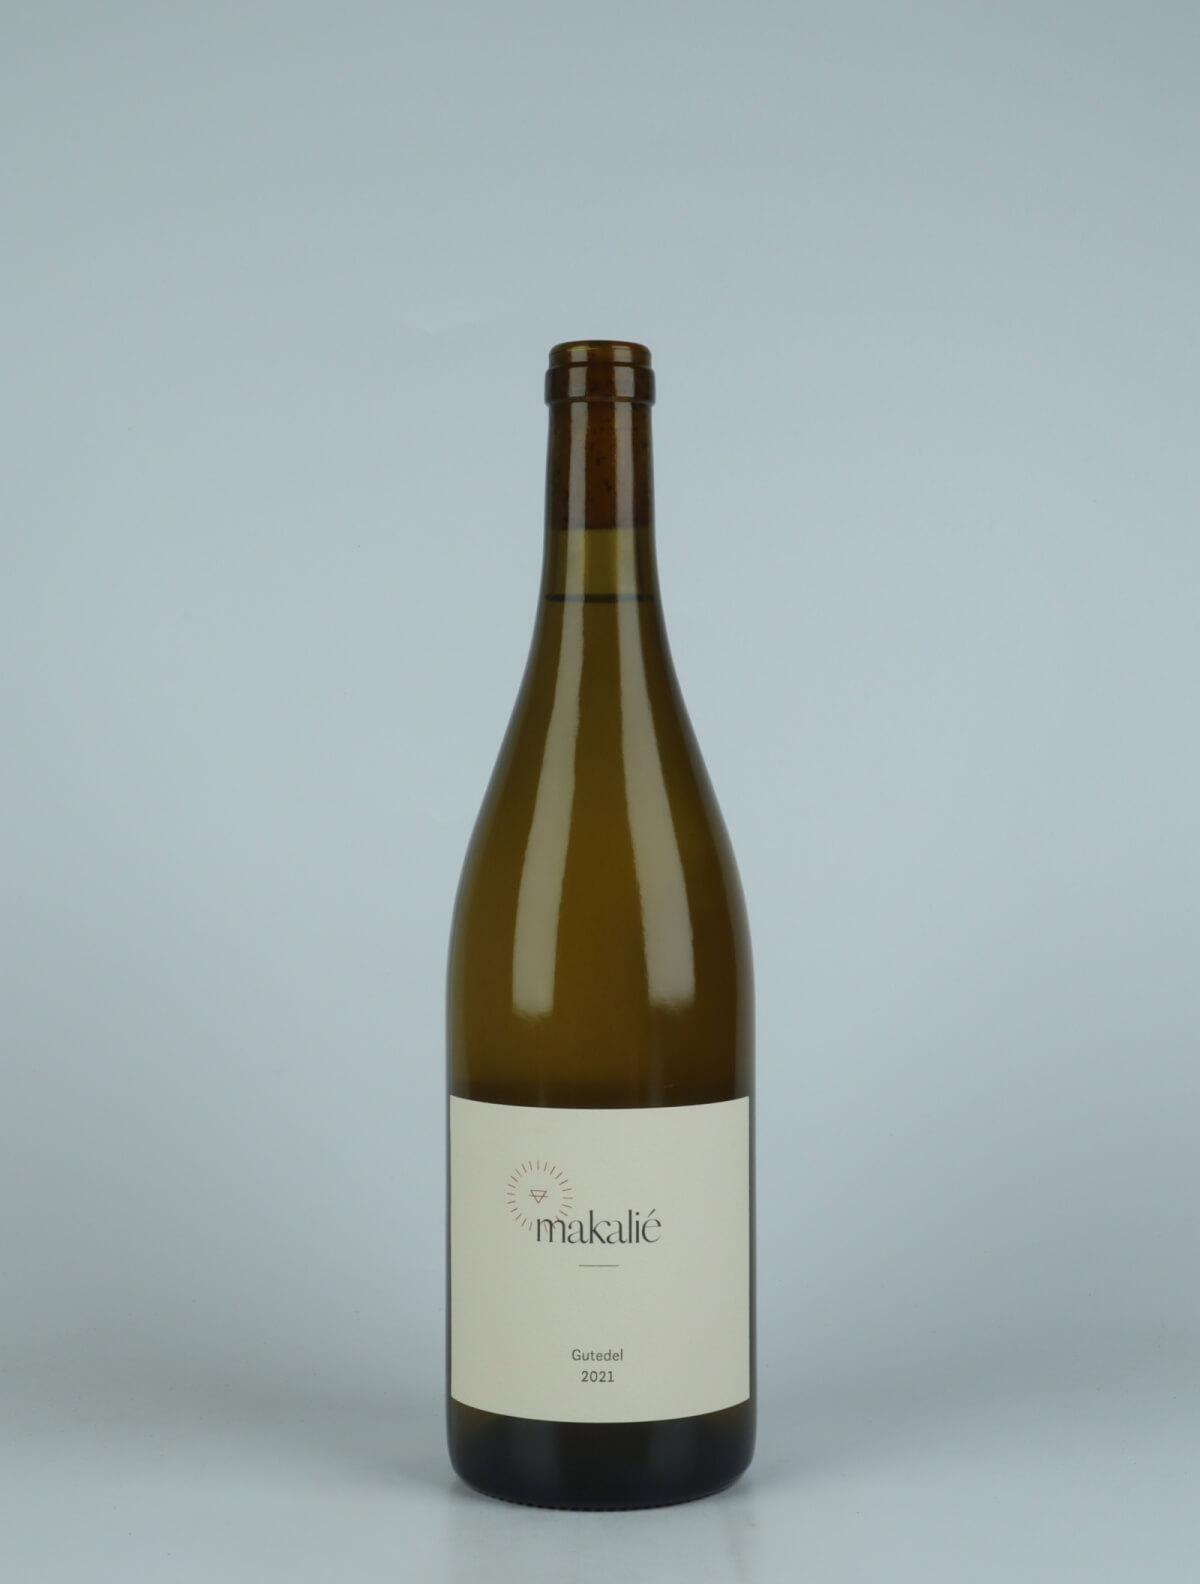 A bottle 2021 Gutedel White wine from Makalié, Baden in Germany